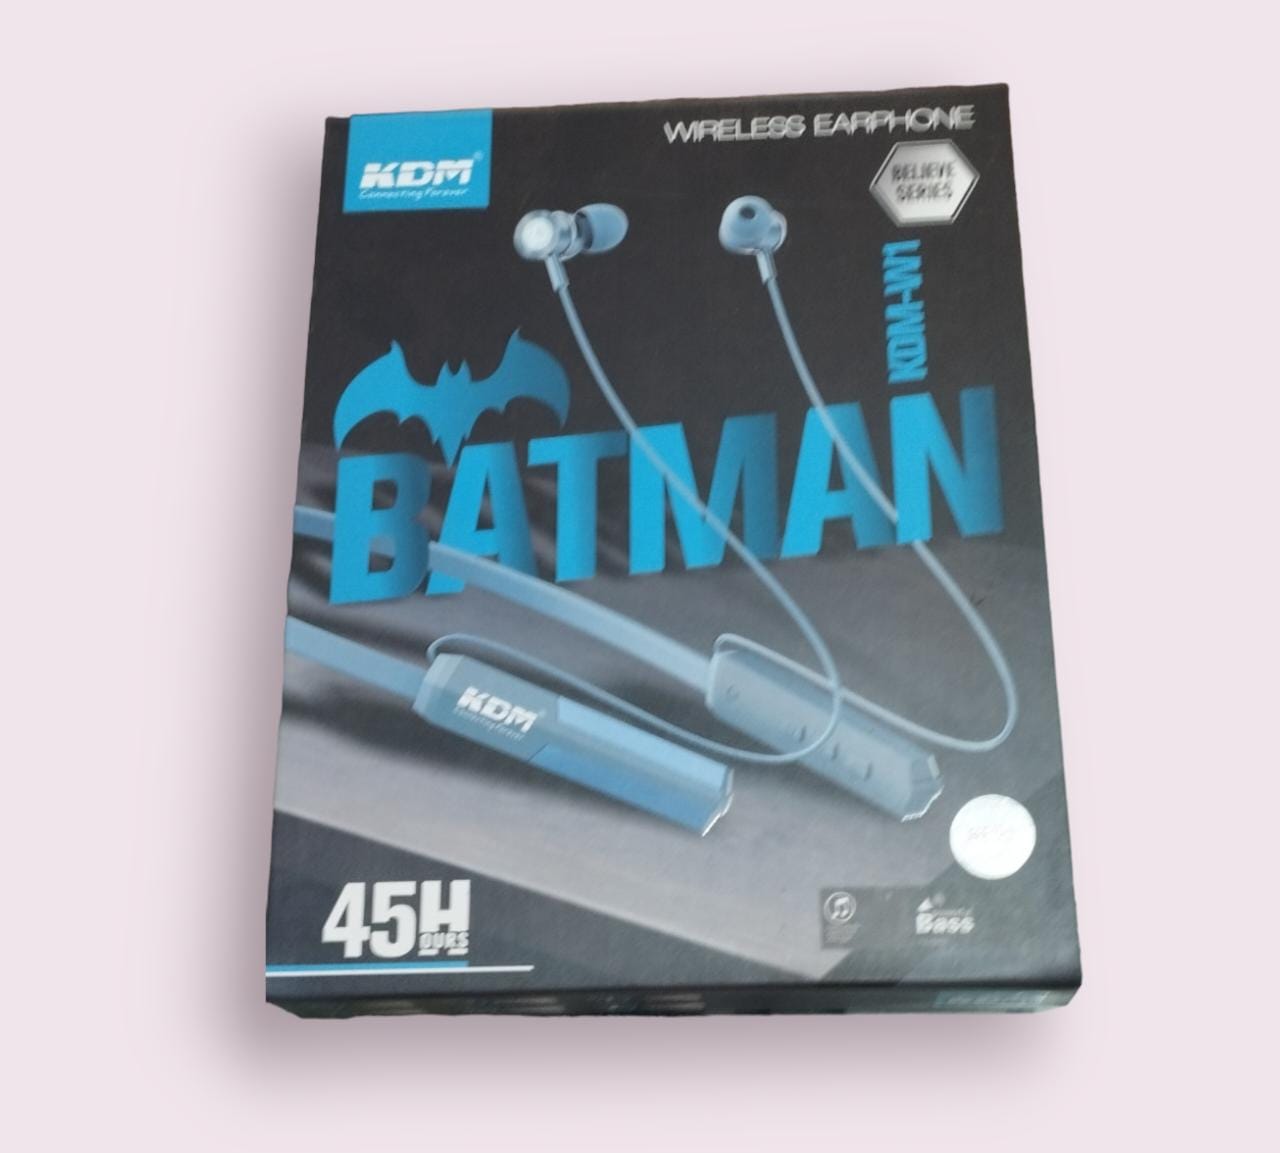 KDM batman Bluetooth earphone